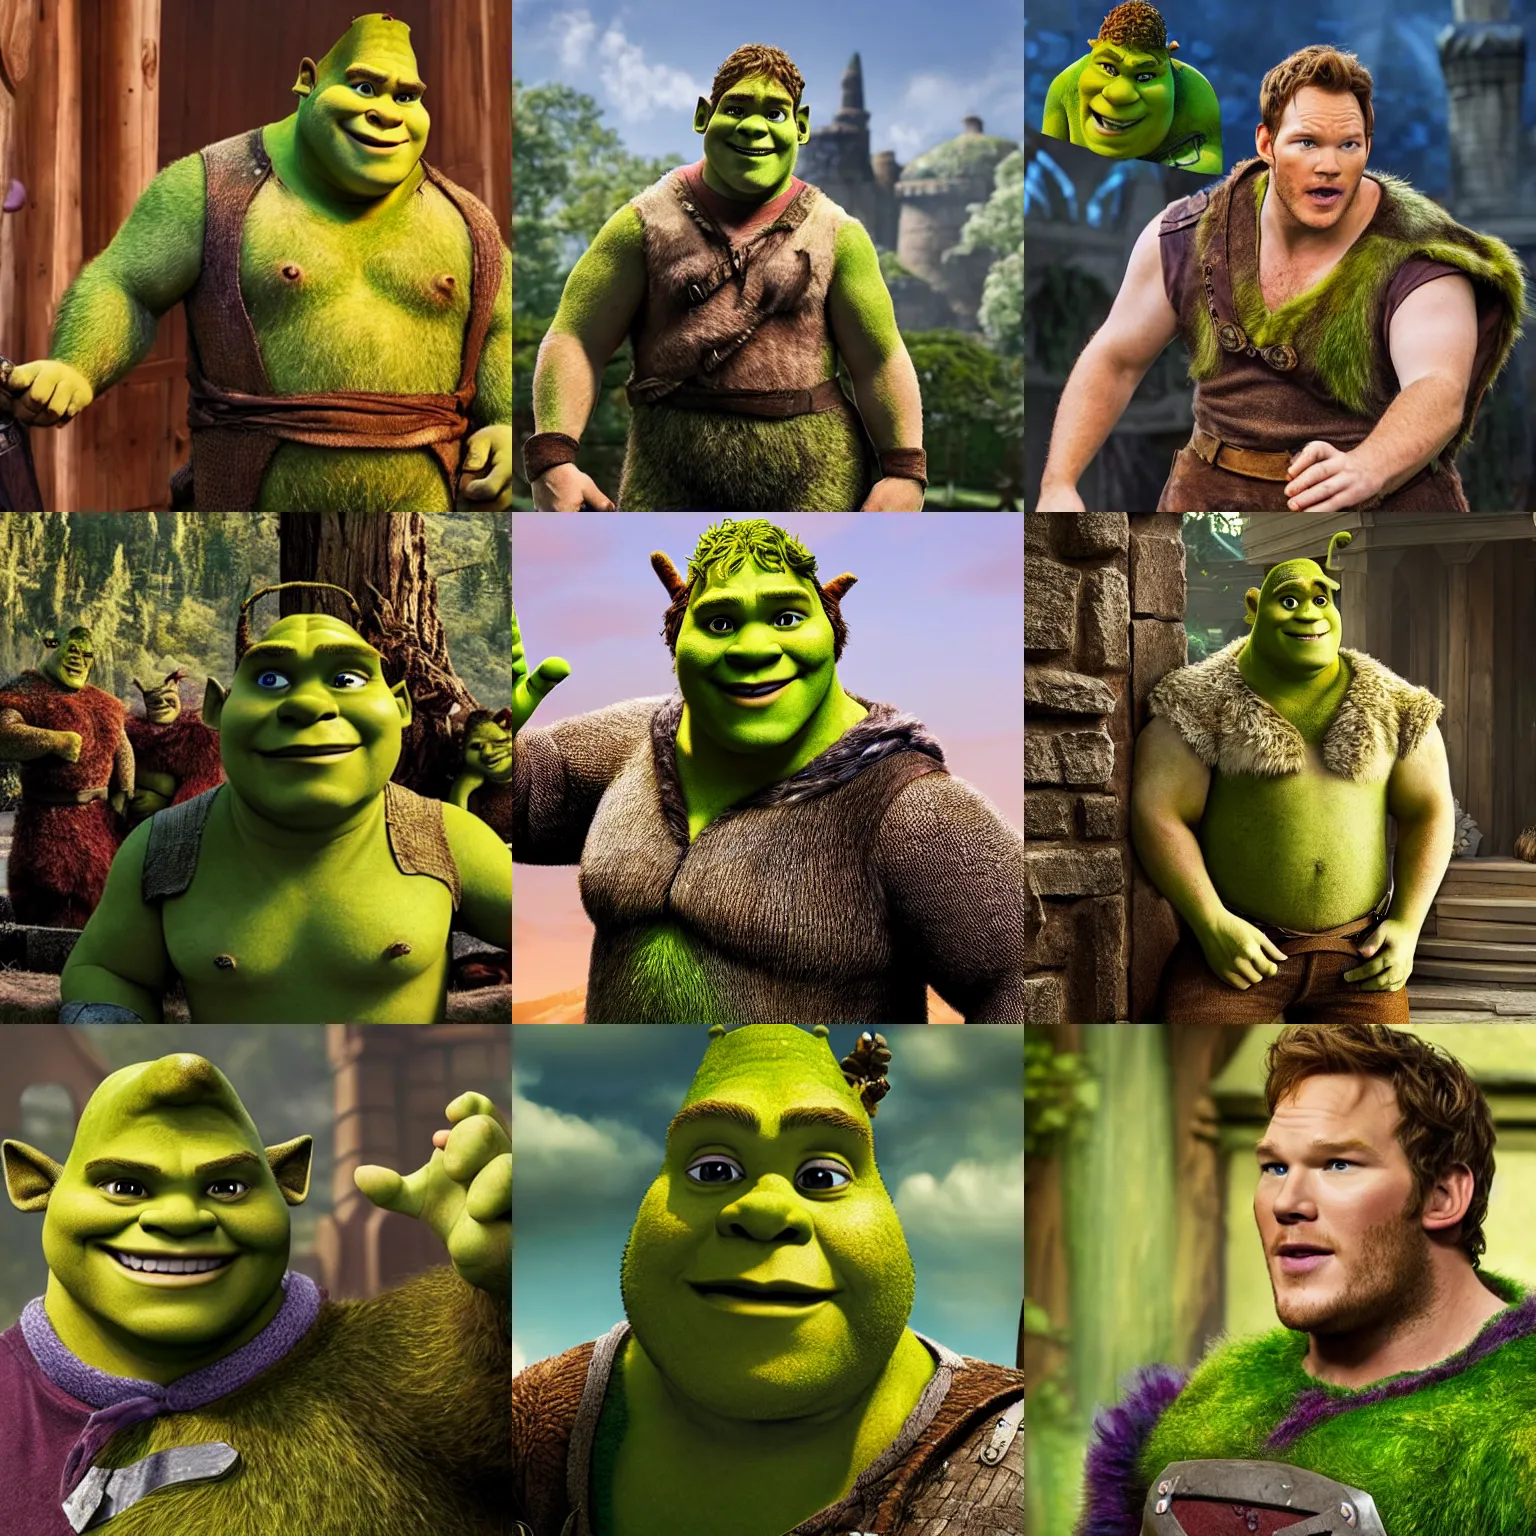 Prompt: Chris Pratt as Shrek, live action movie set photograph